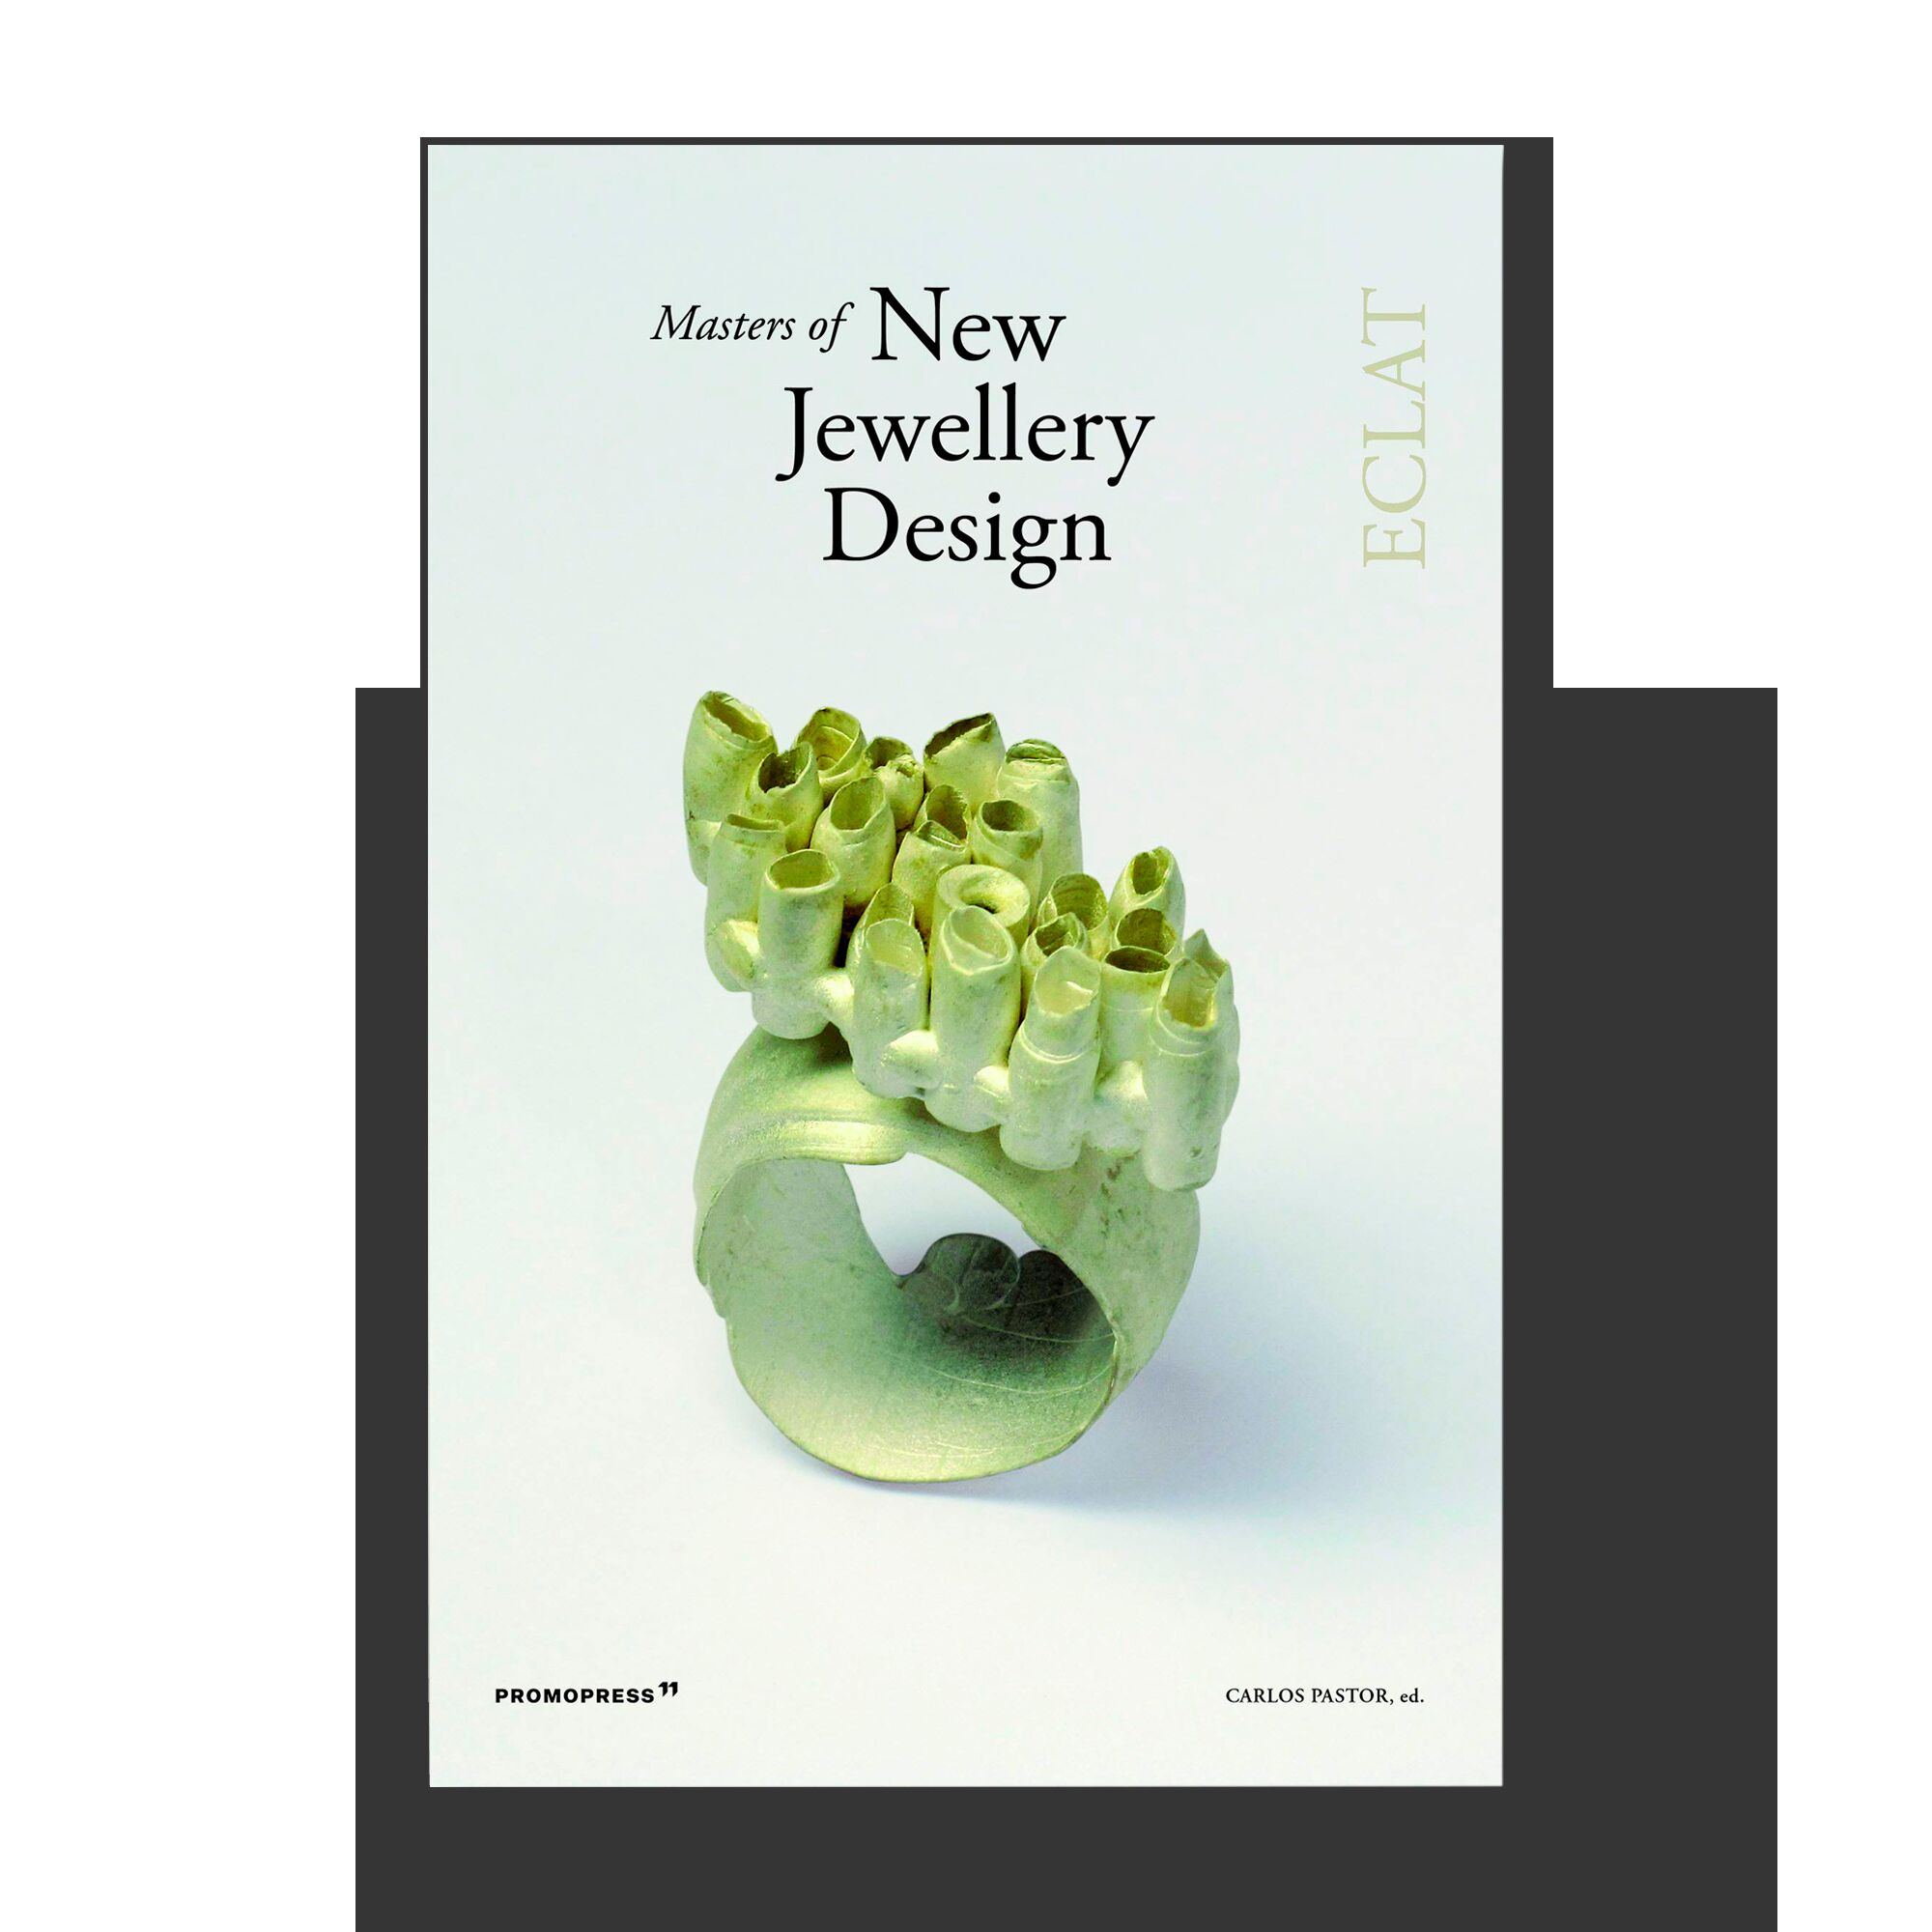 Masters of New Jewellery Design